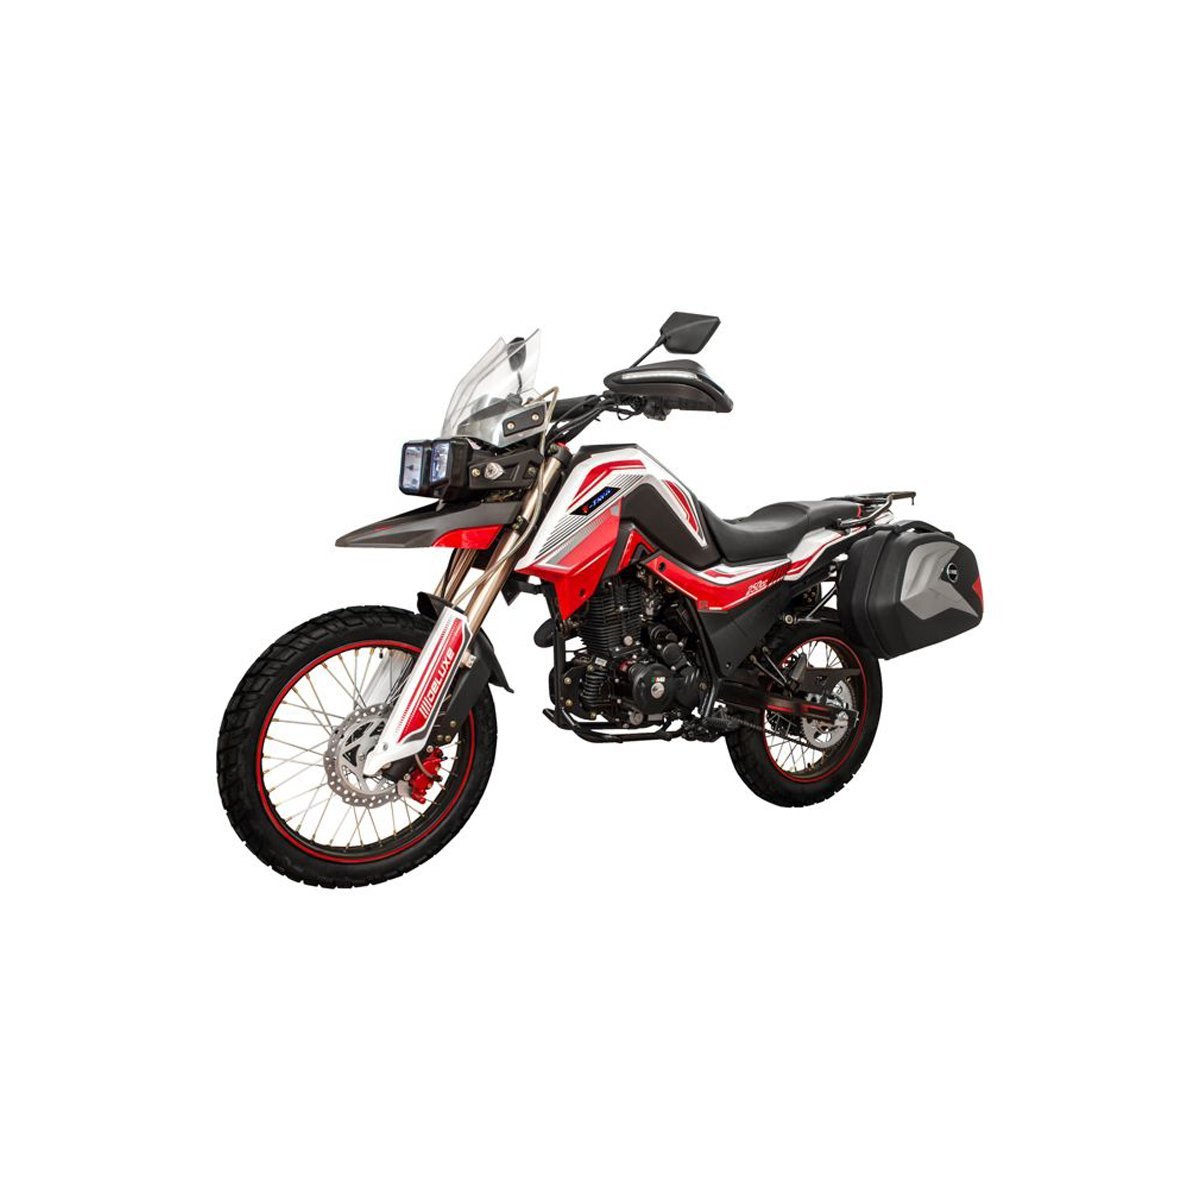 Motocicleta X Trail 250 Cc Mb